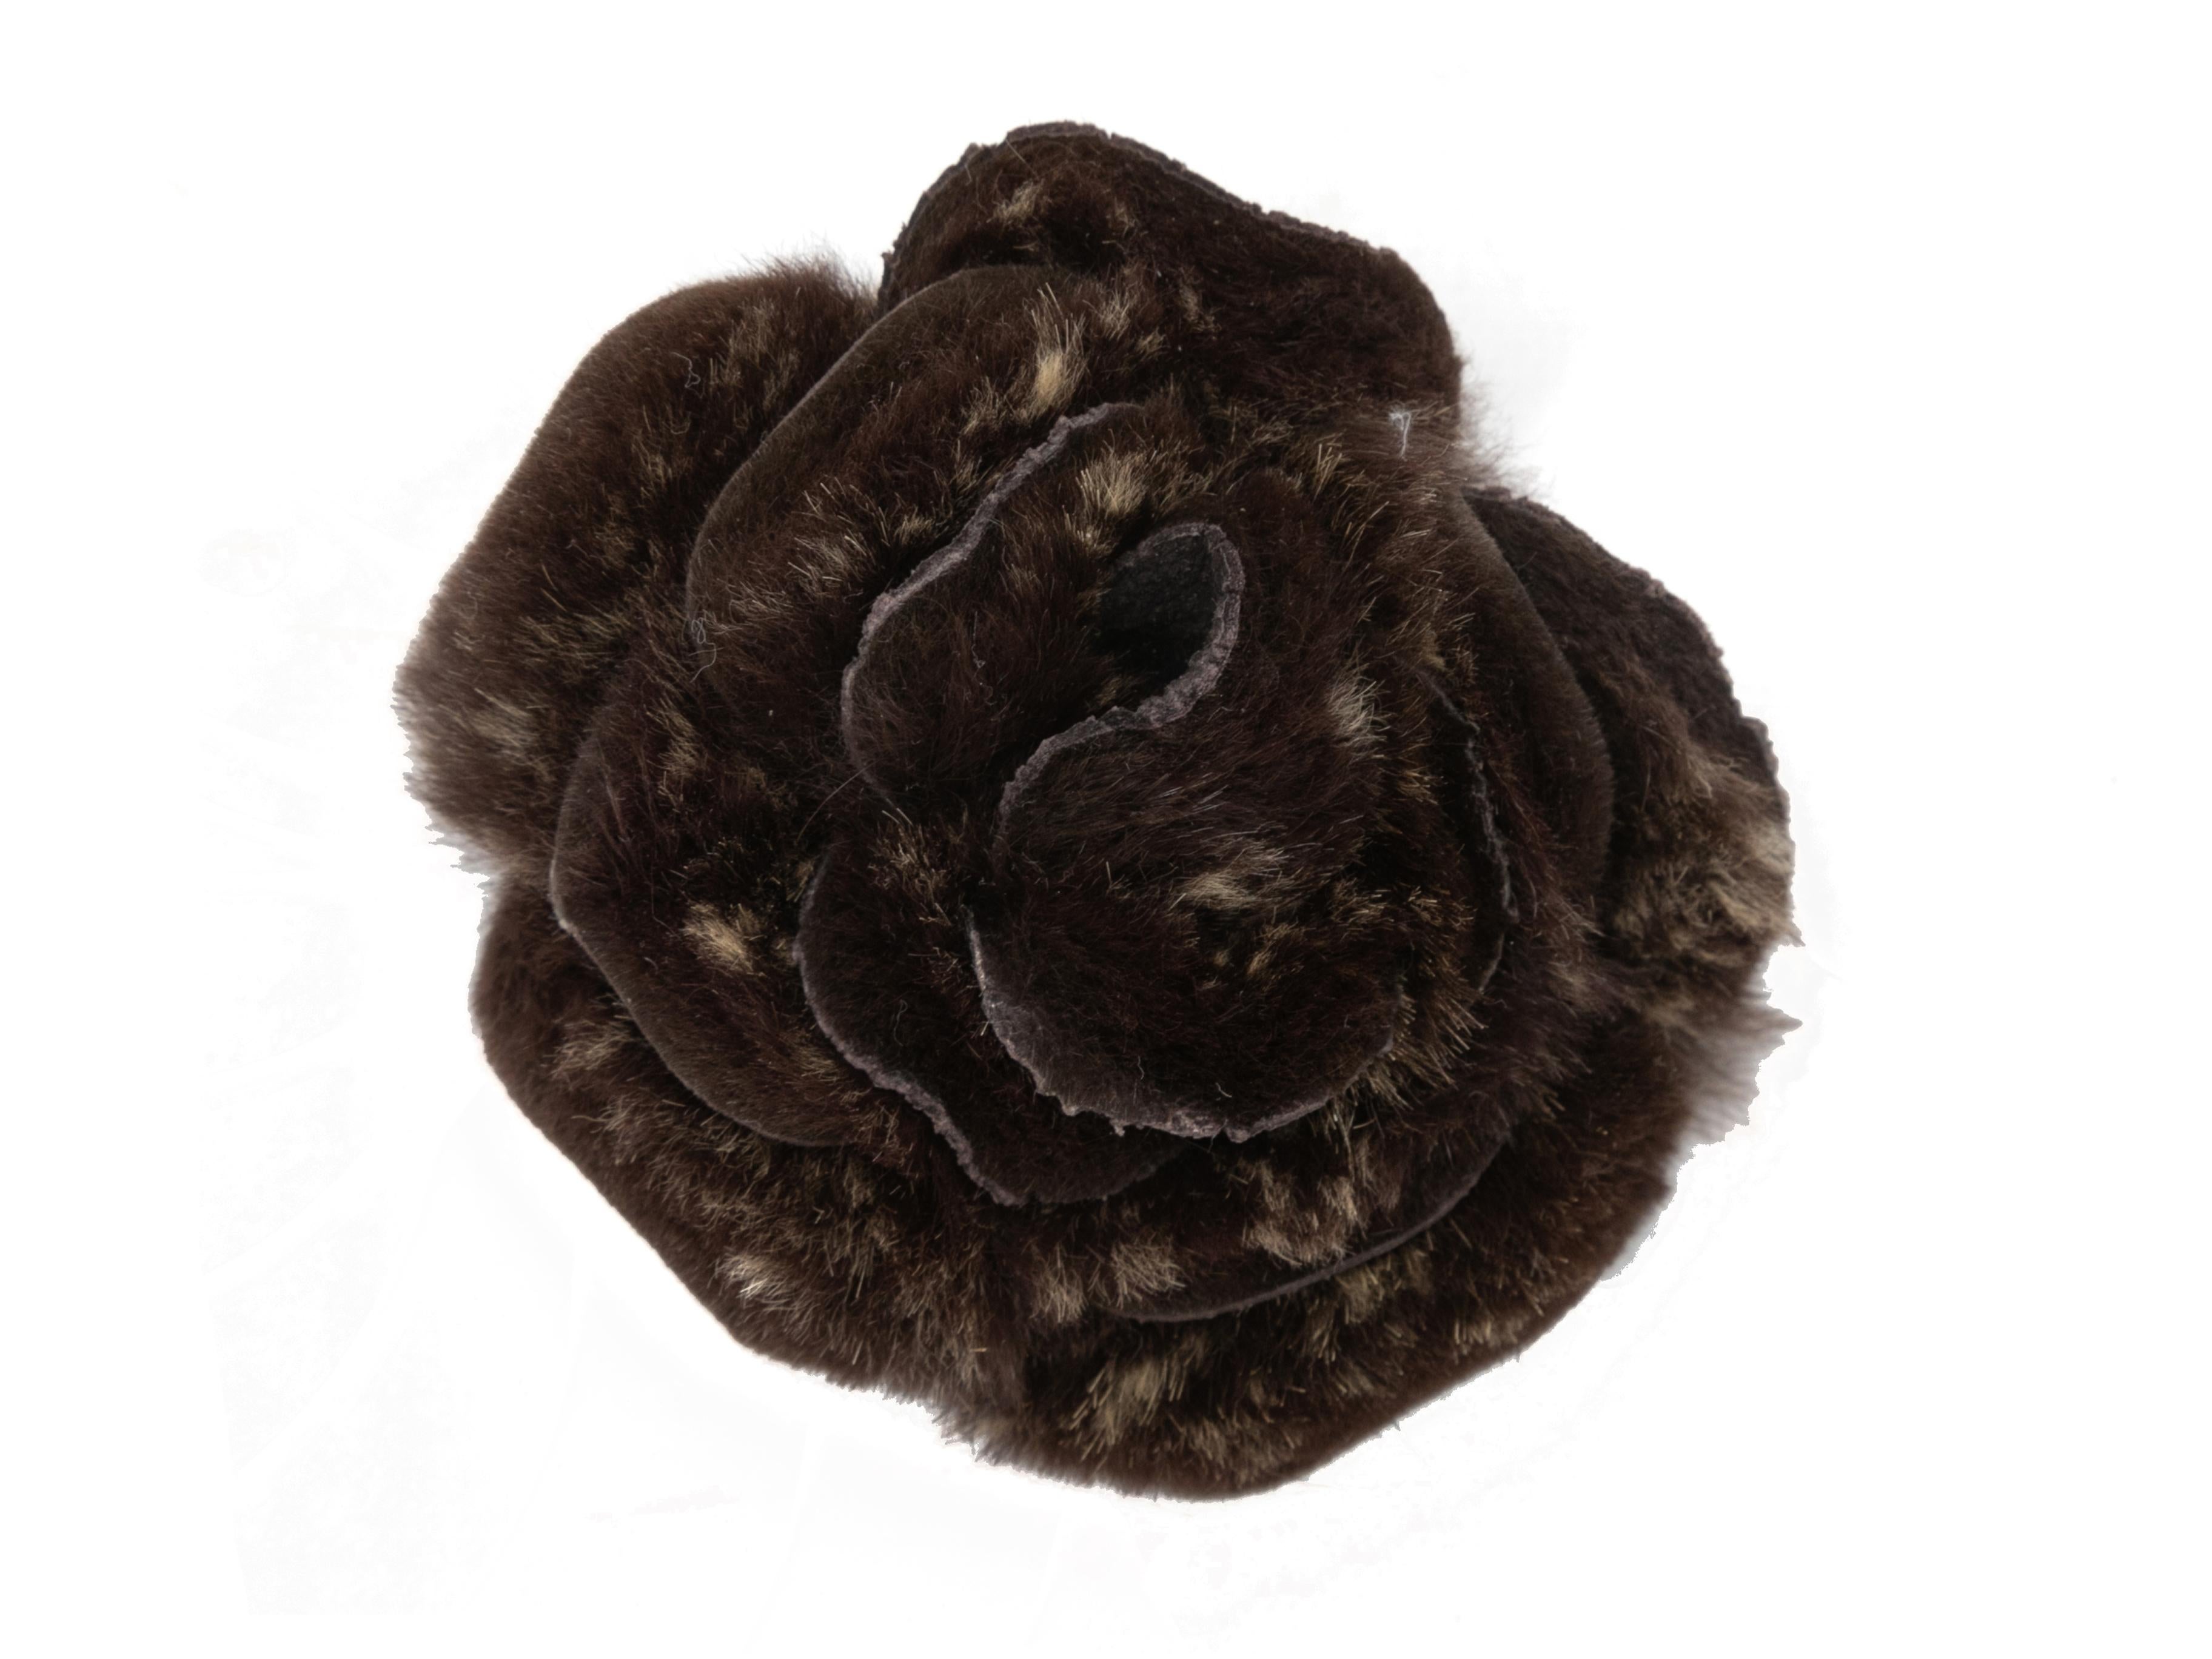 Brown rabbit fur camellia lapel pin by Chanel. 3.5